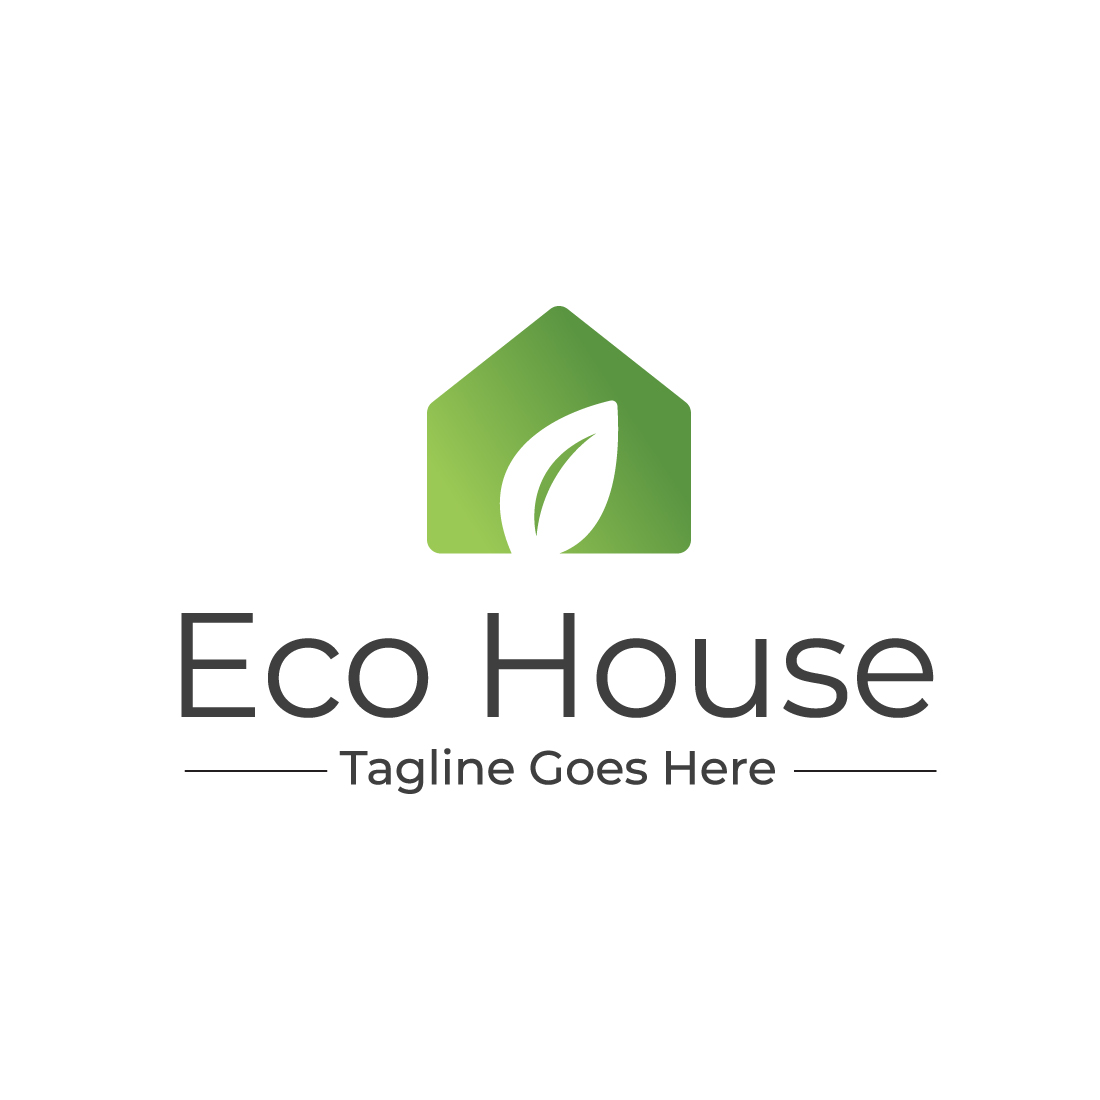 Eco House Logo Design Template cover image.